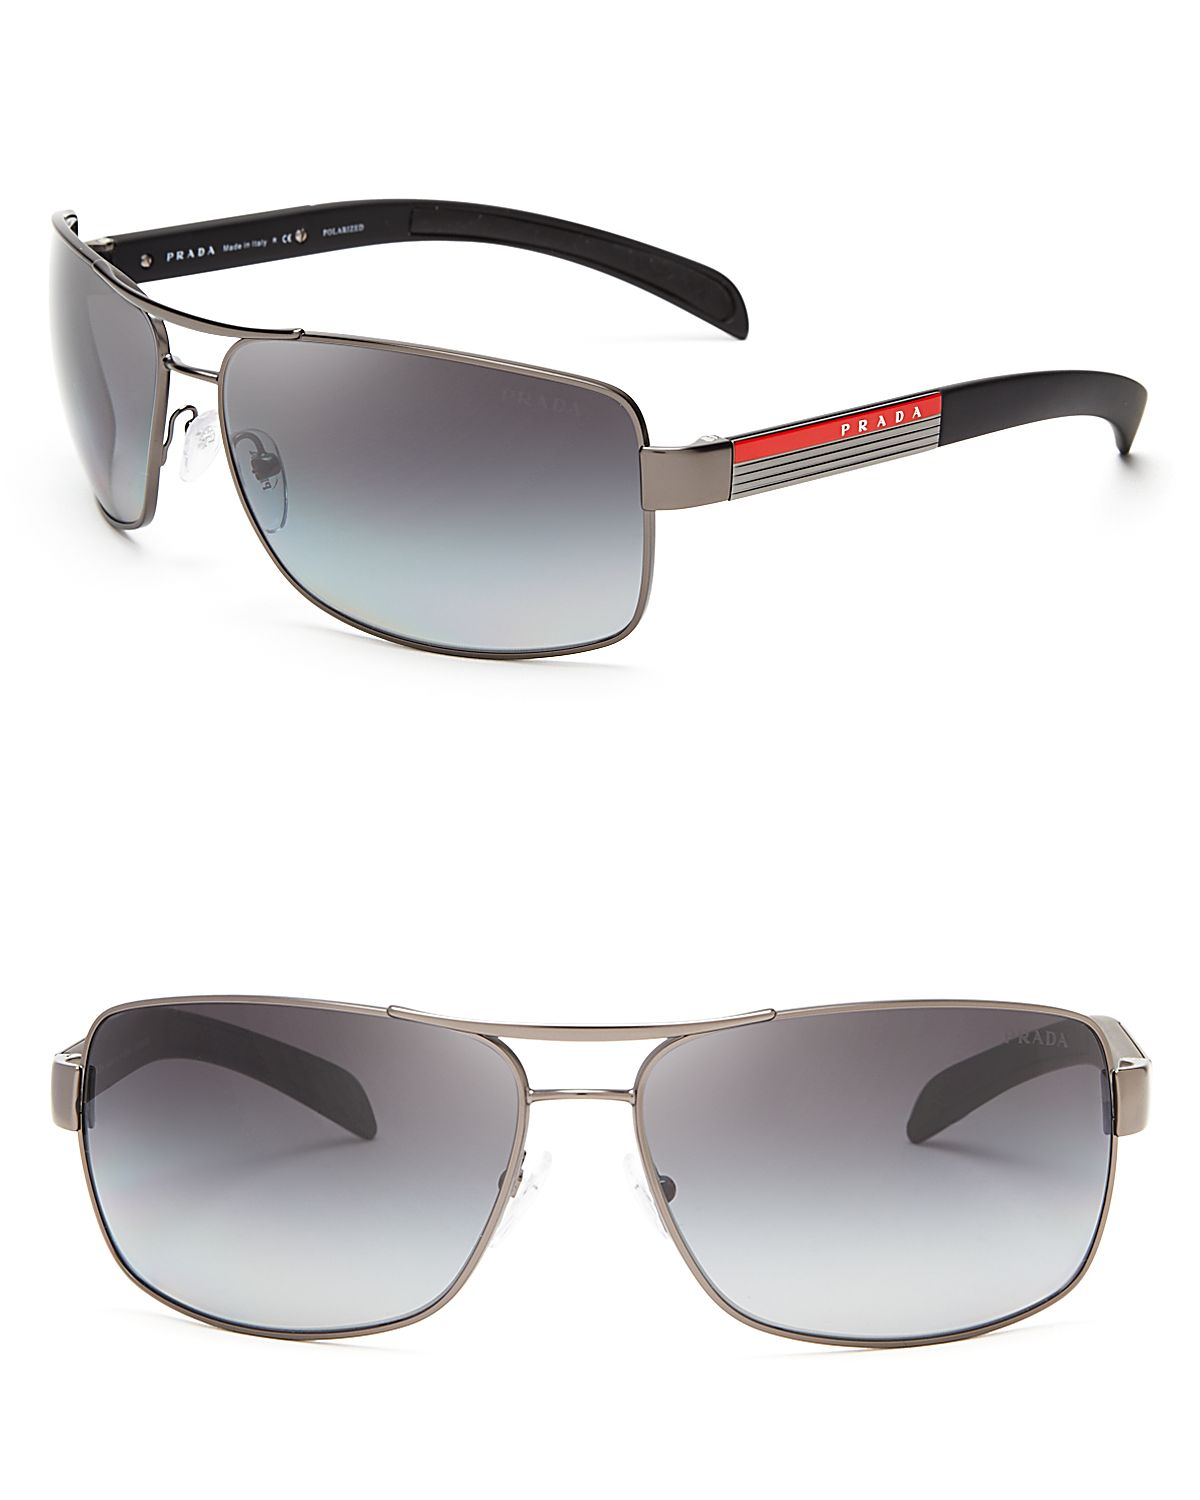 Prada Linea Rossa Mirrored Active Aviator Sunglasses in Gray for Men - Lyst